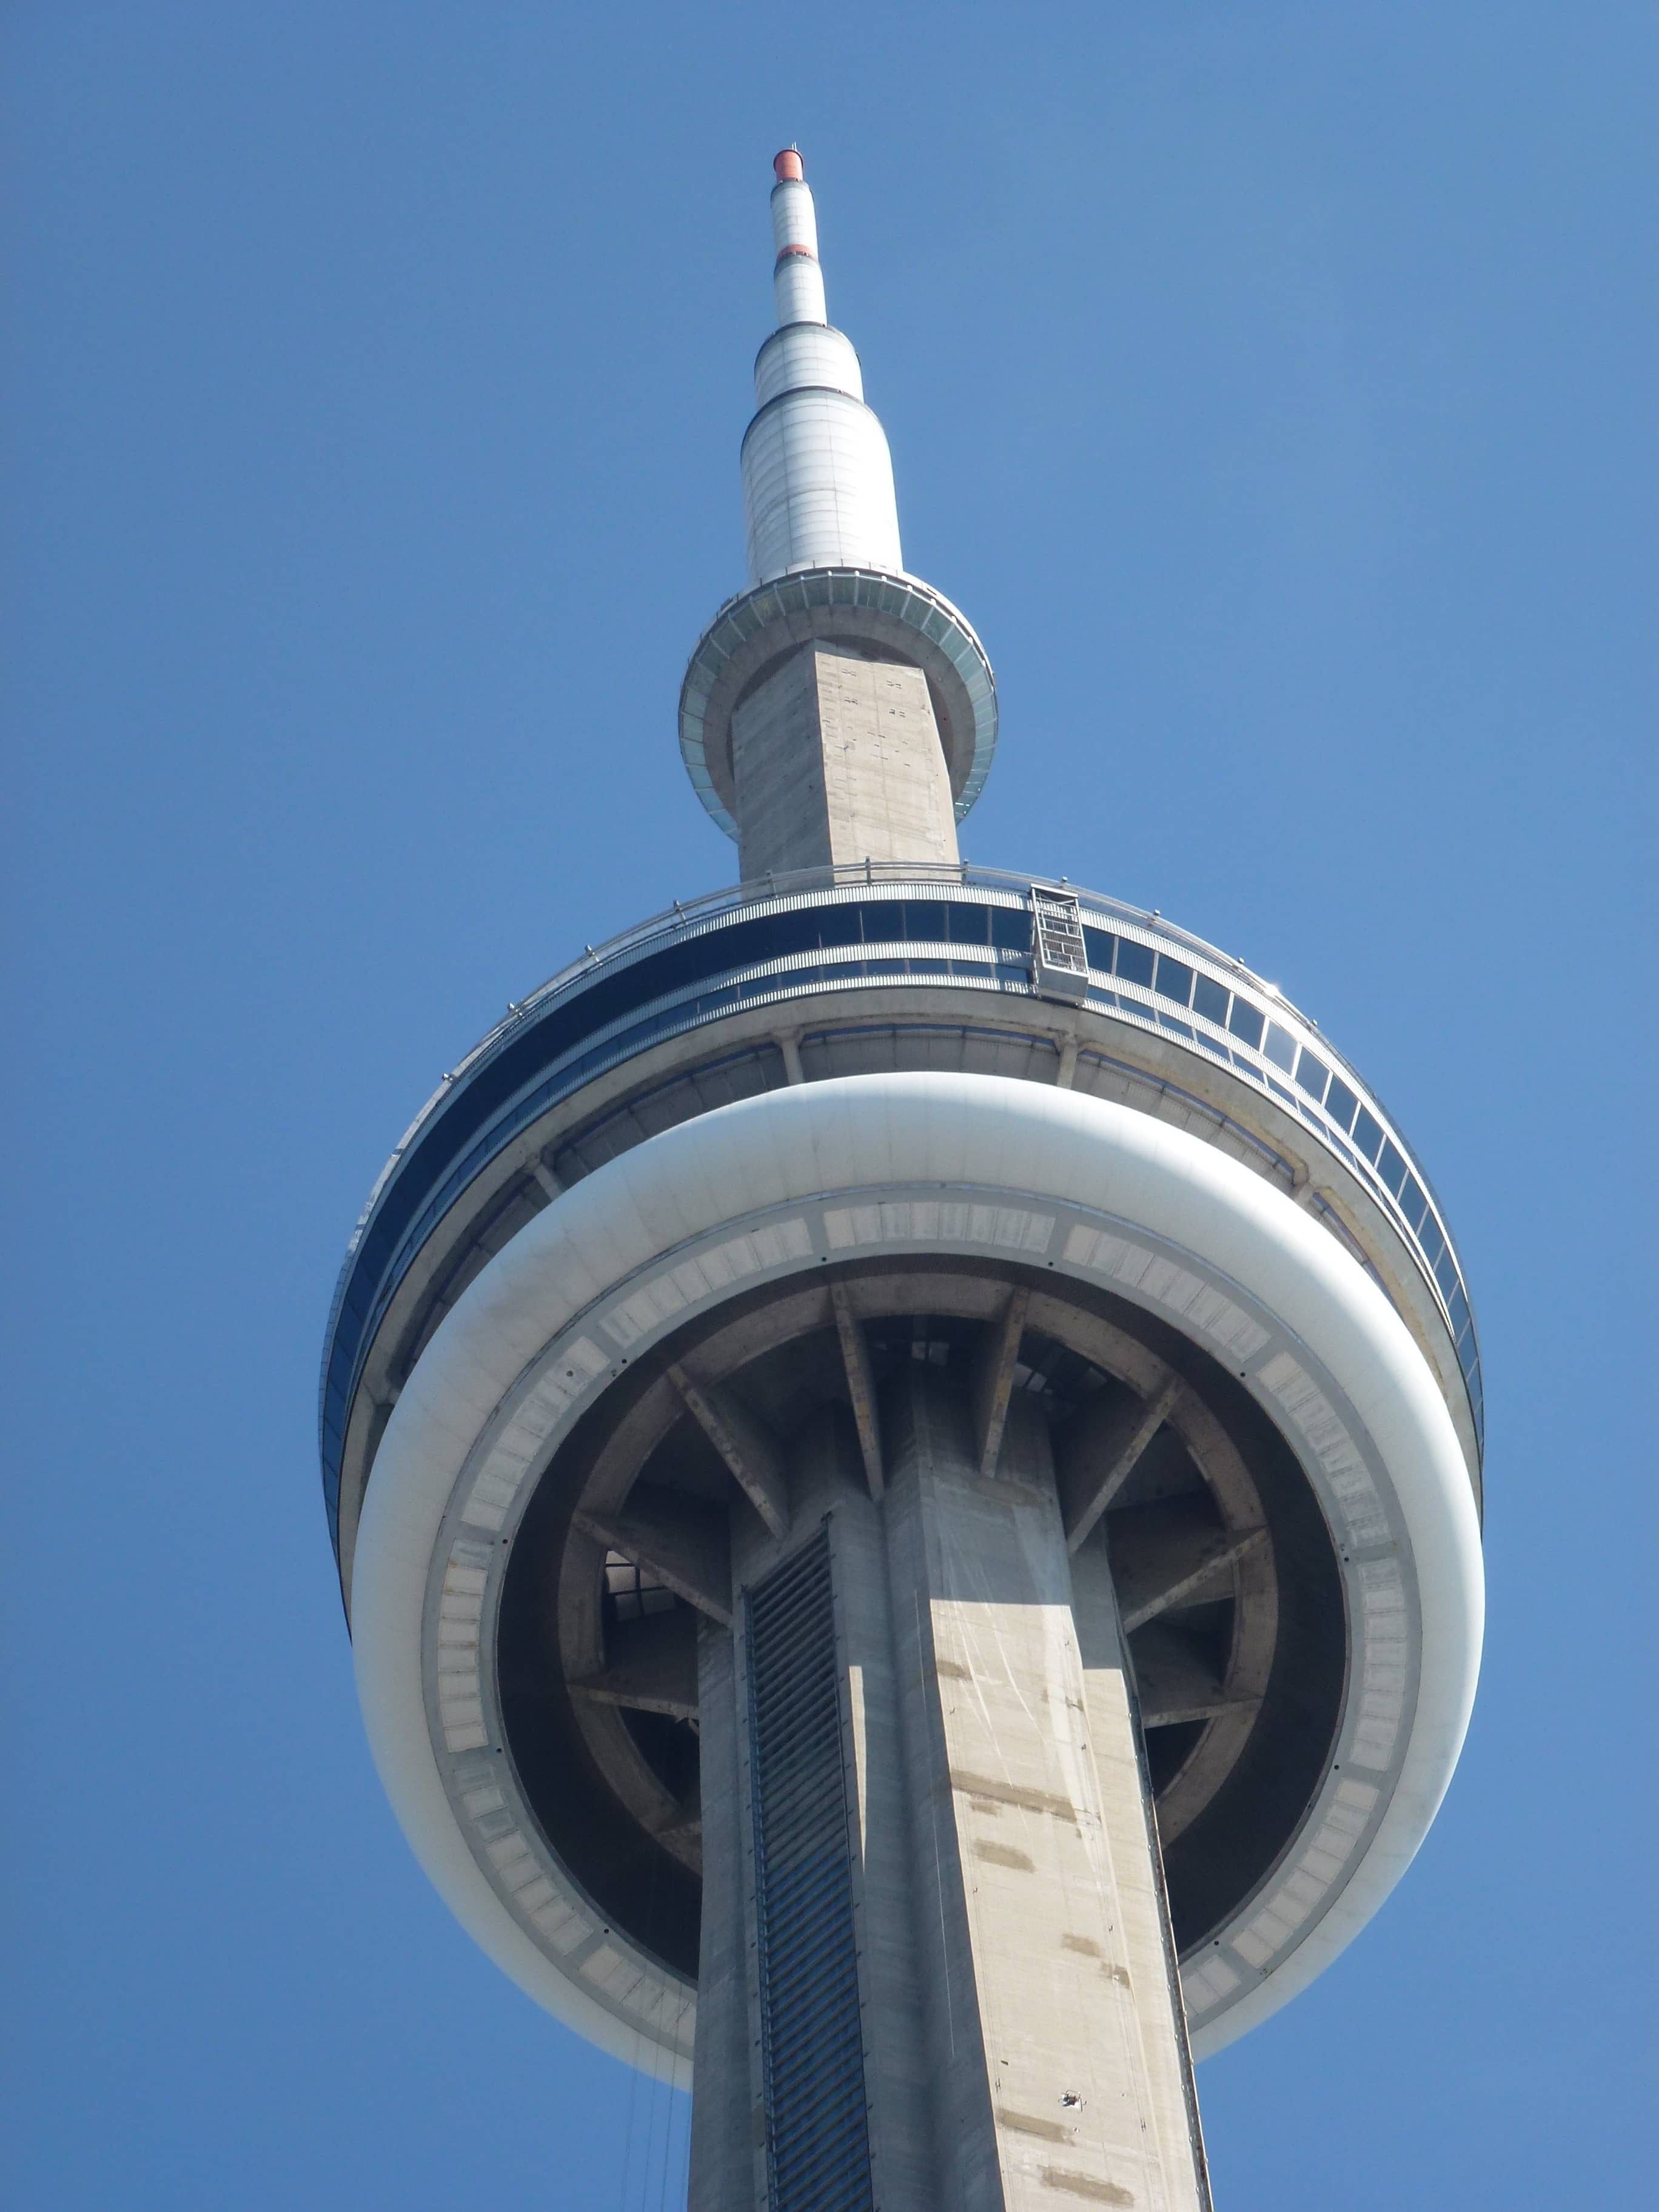 CN Tower in Toronto, Ontario, Canada